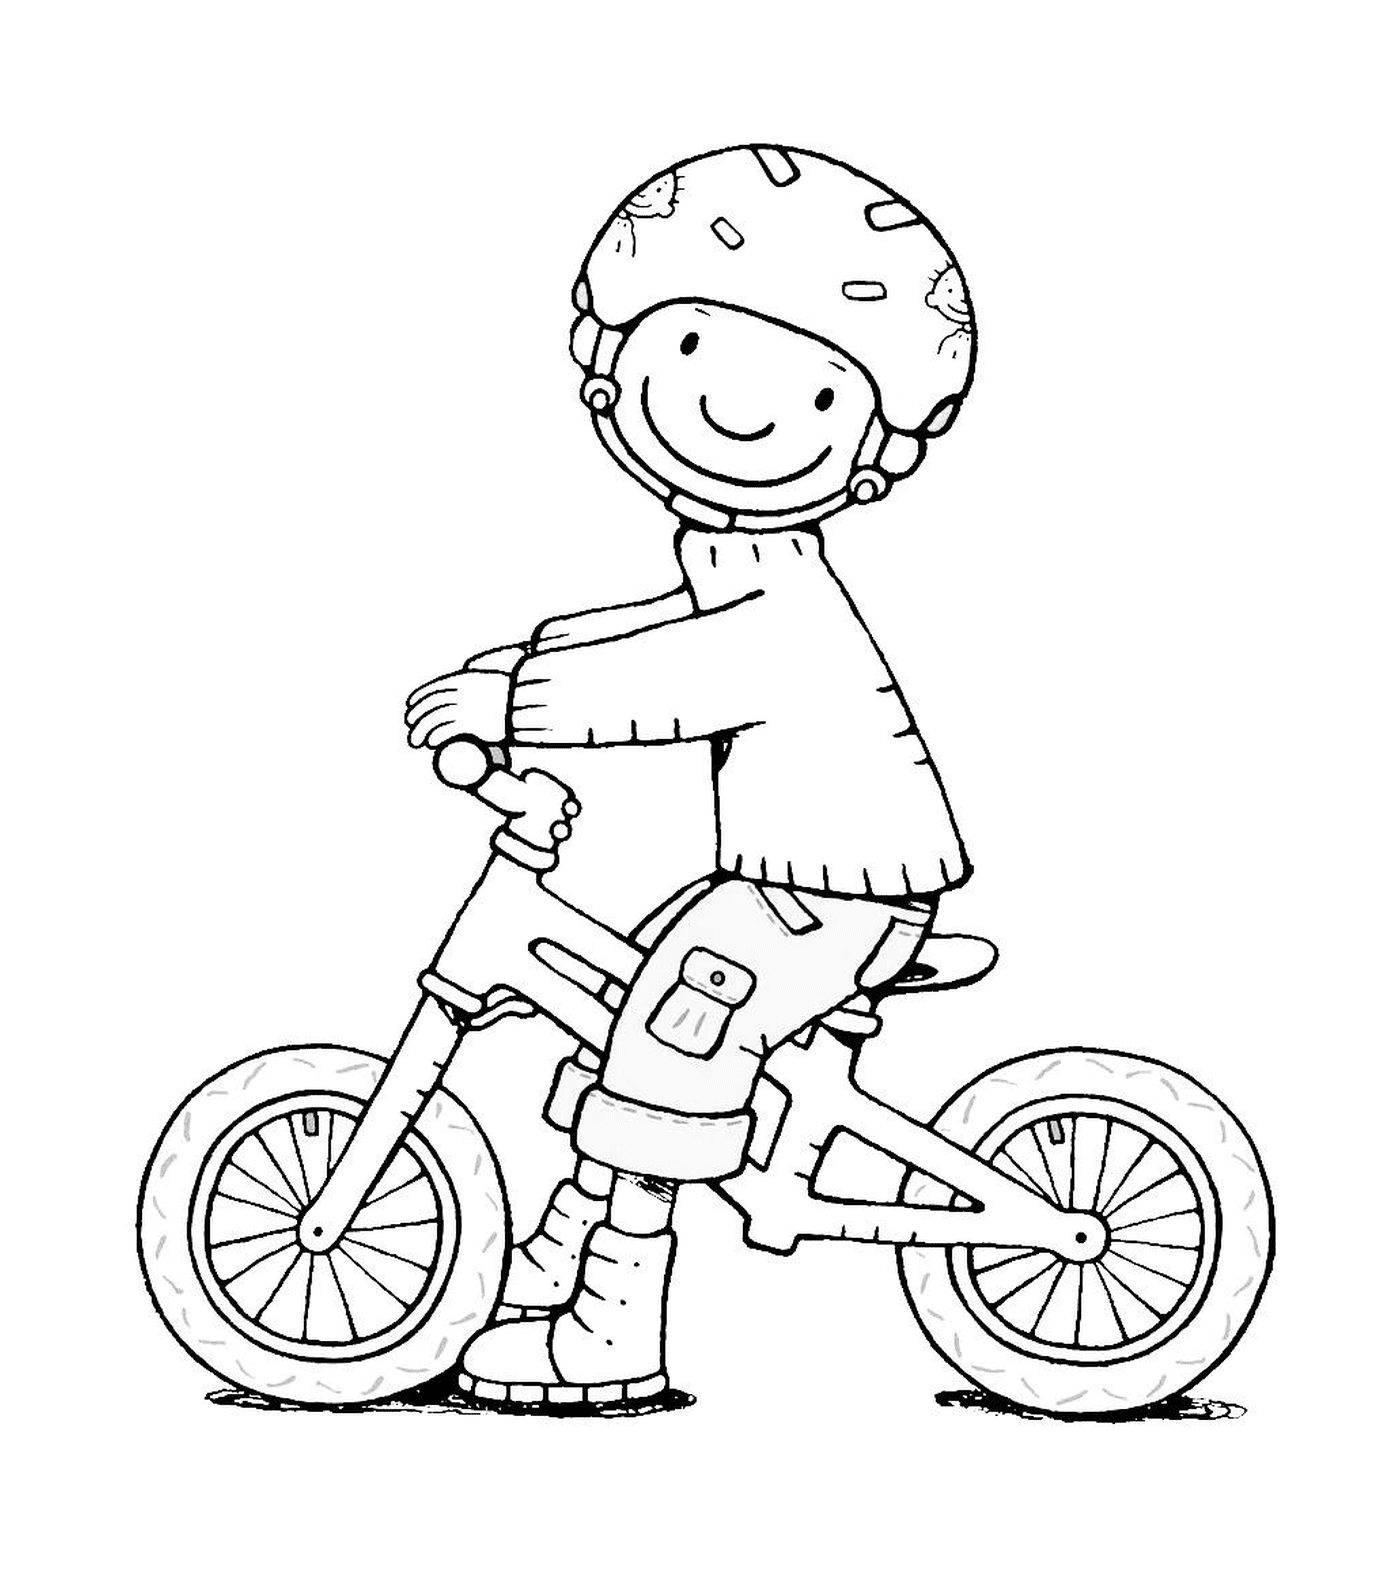  Esporte, bicicleta, menino de bicicleta 